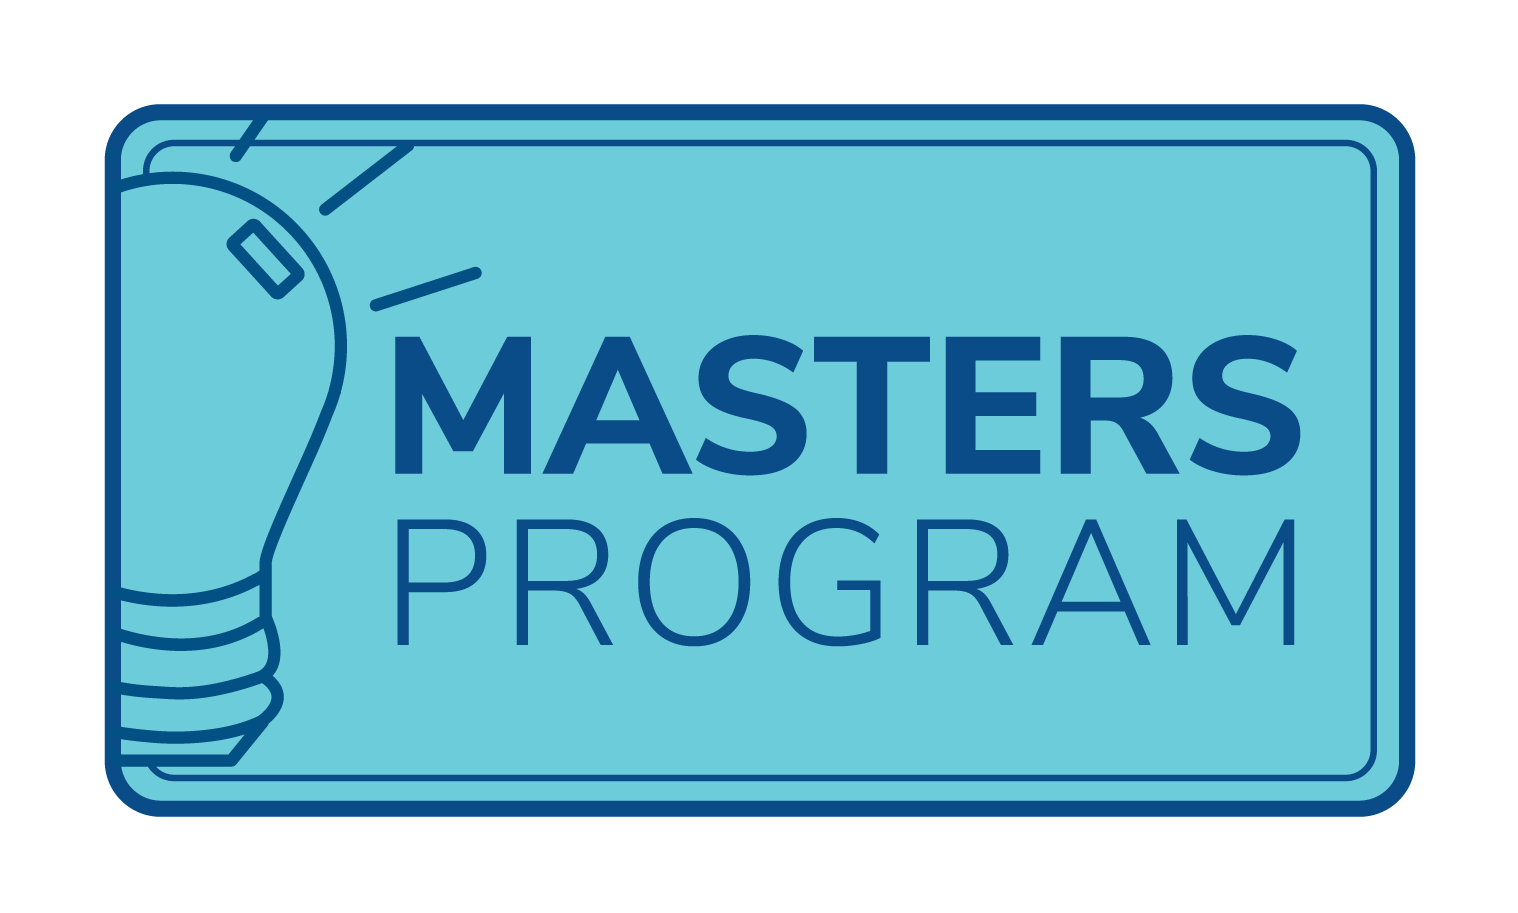 Masters programmes